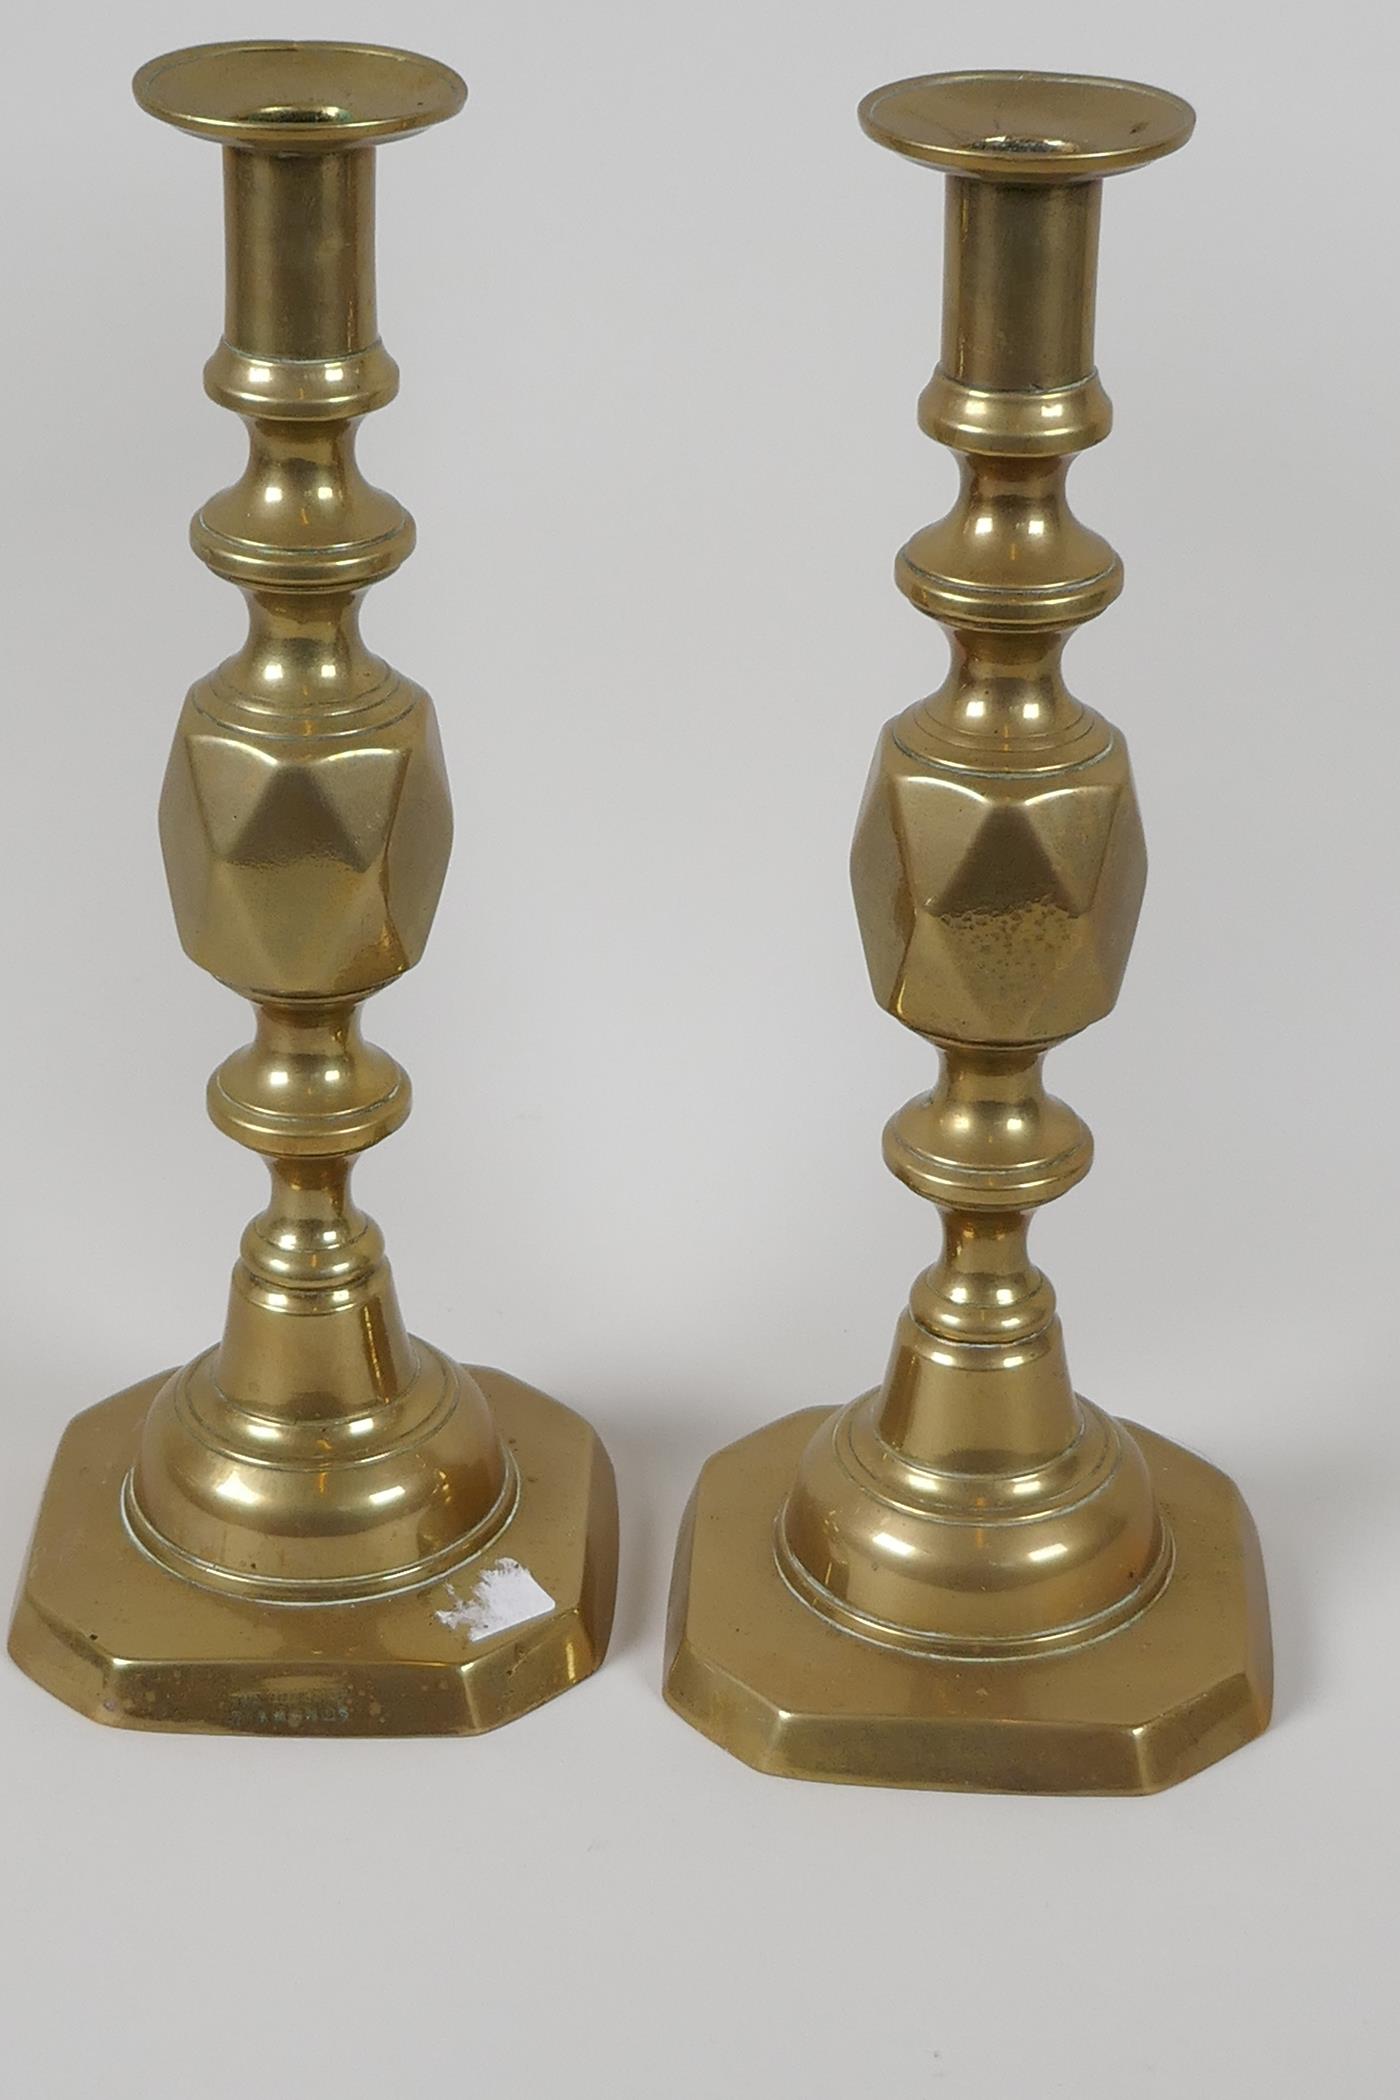 A pair of C19th brass "The Queen of Diamonds" pattern candlesticks, 11½" high